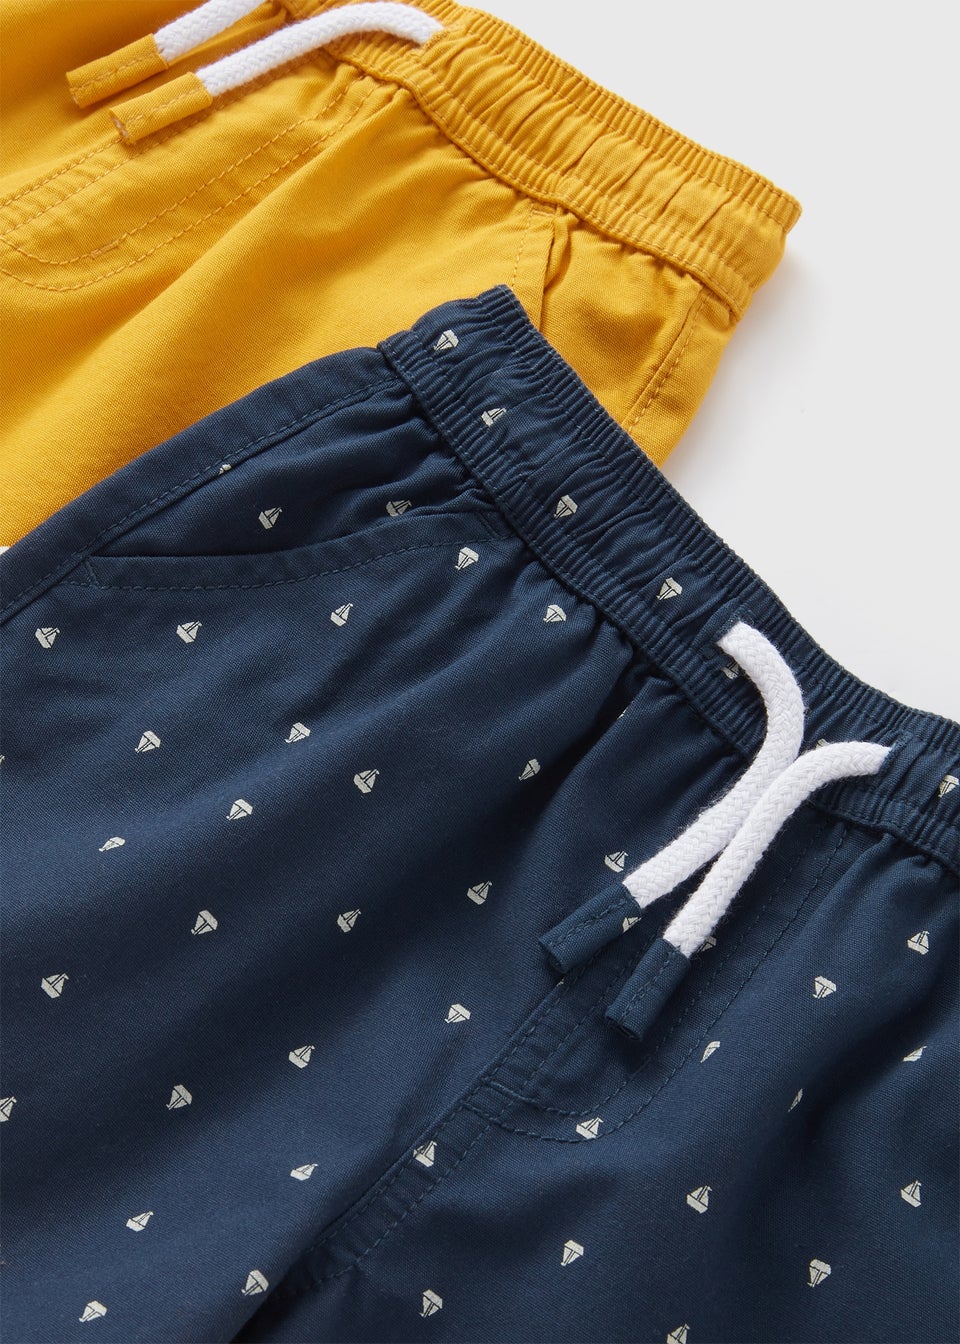 Boys 2 Pack Navy & Yellow Woven Boat Print Shorts (1-7yrs)